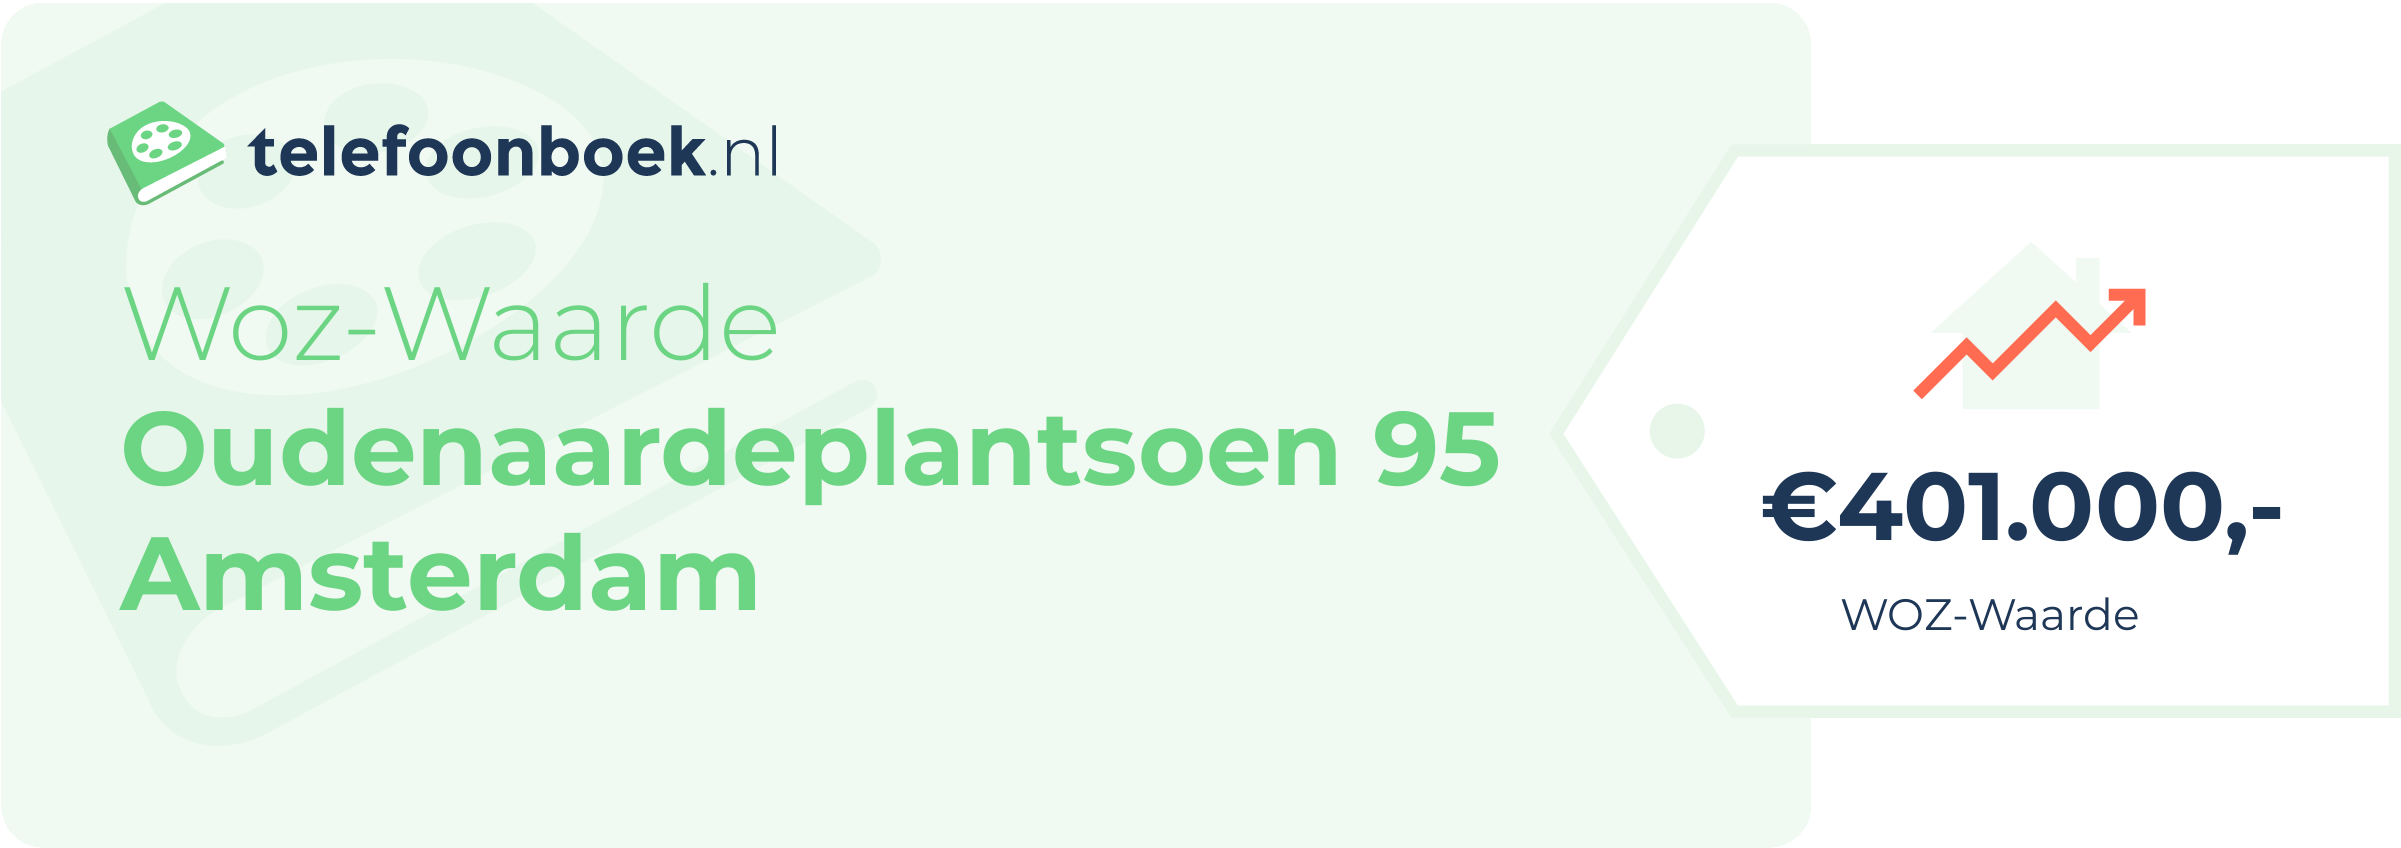 WOZ-waarde Oudenaardeplantsoen 95 Amsterdam